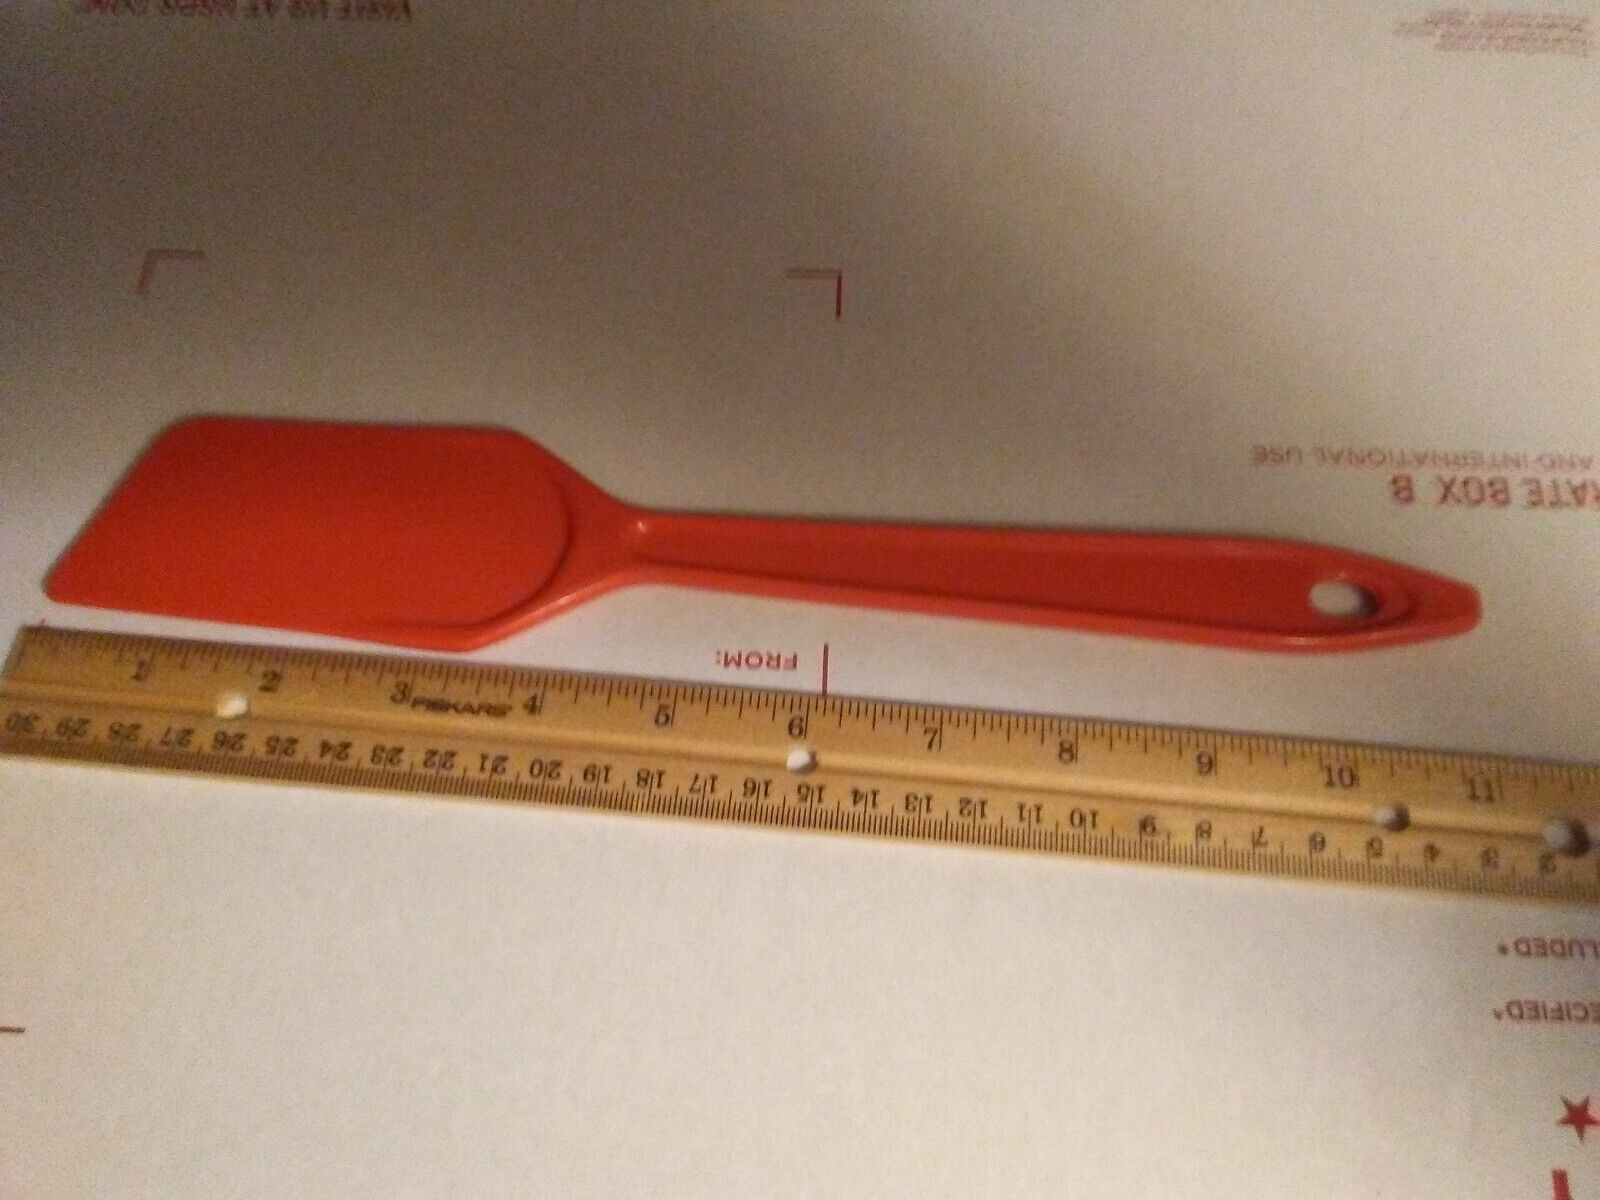 Hutzler utensil scraper - $18.99